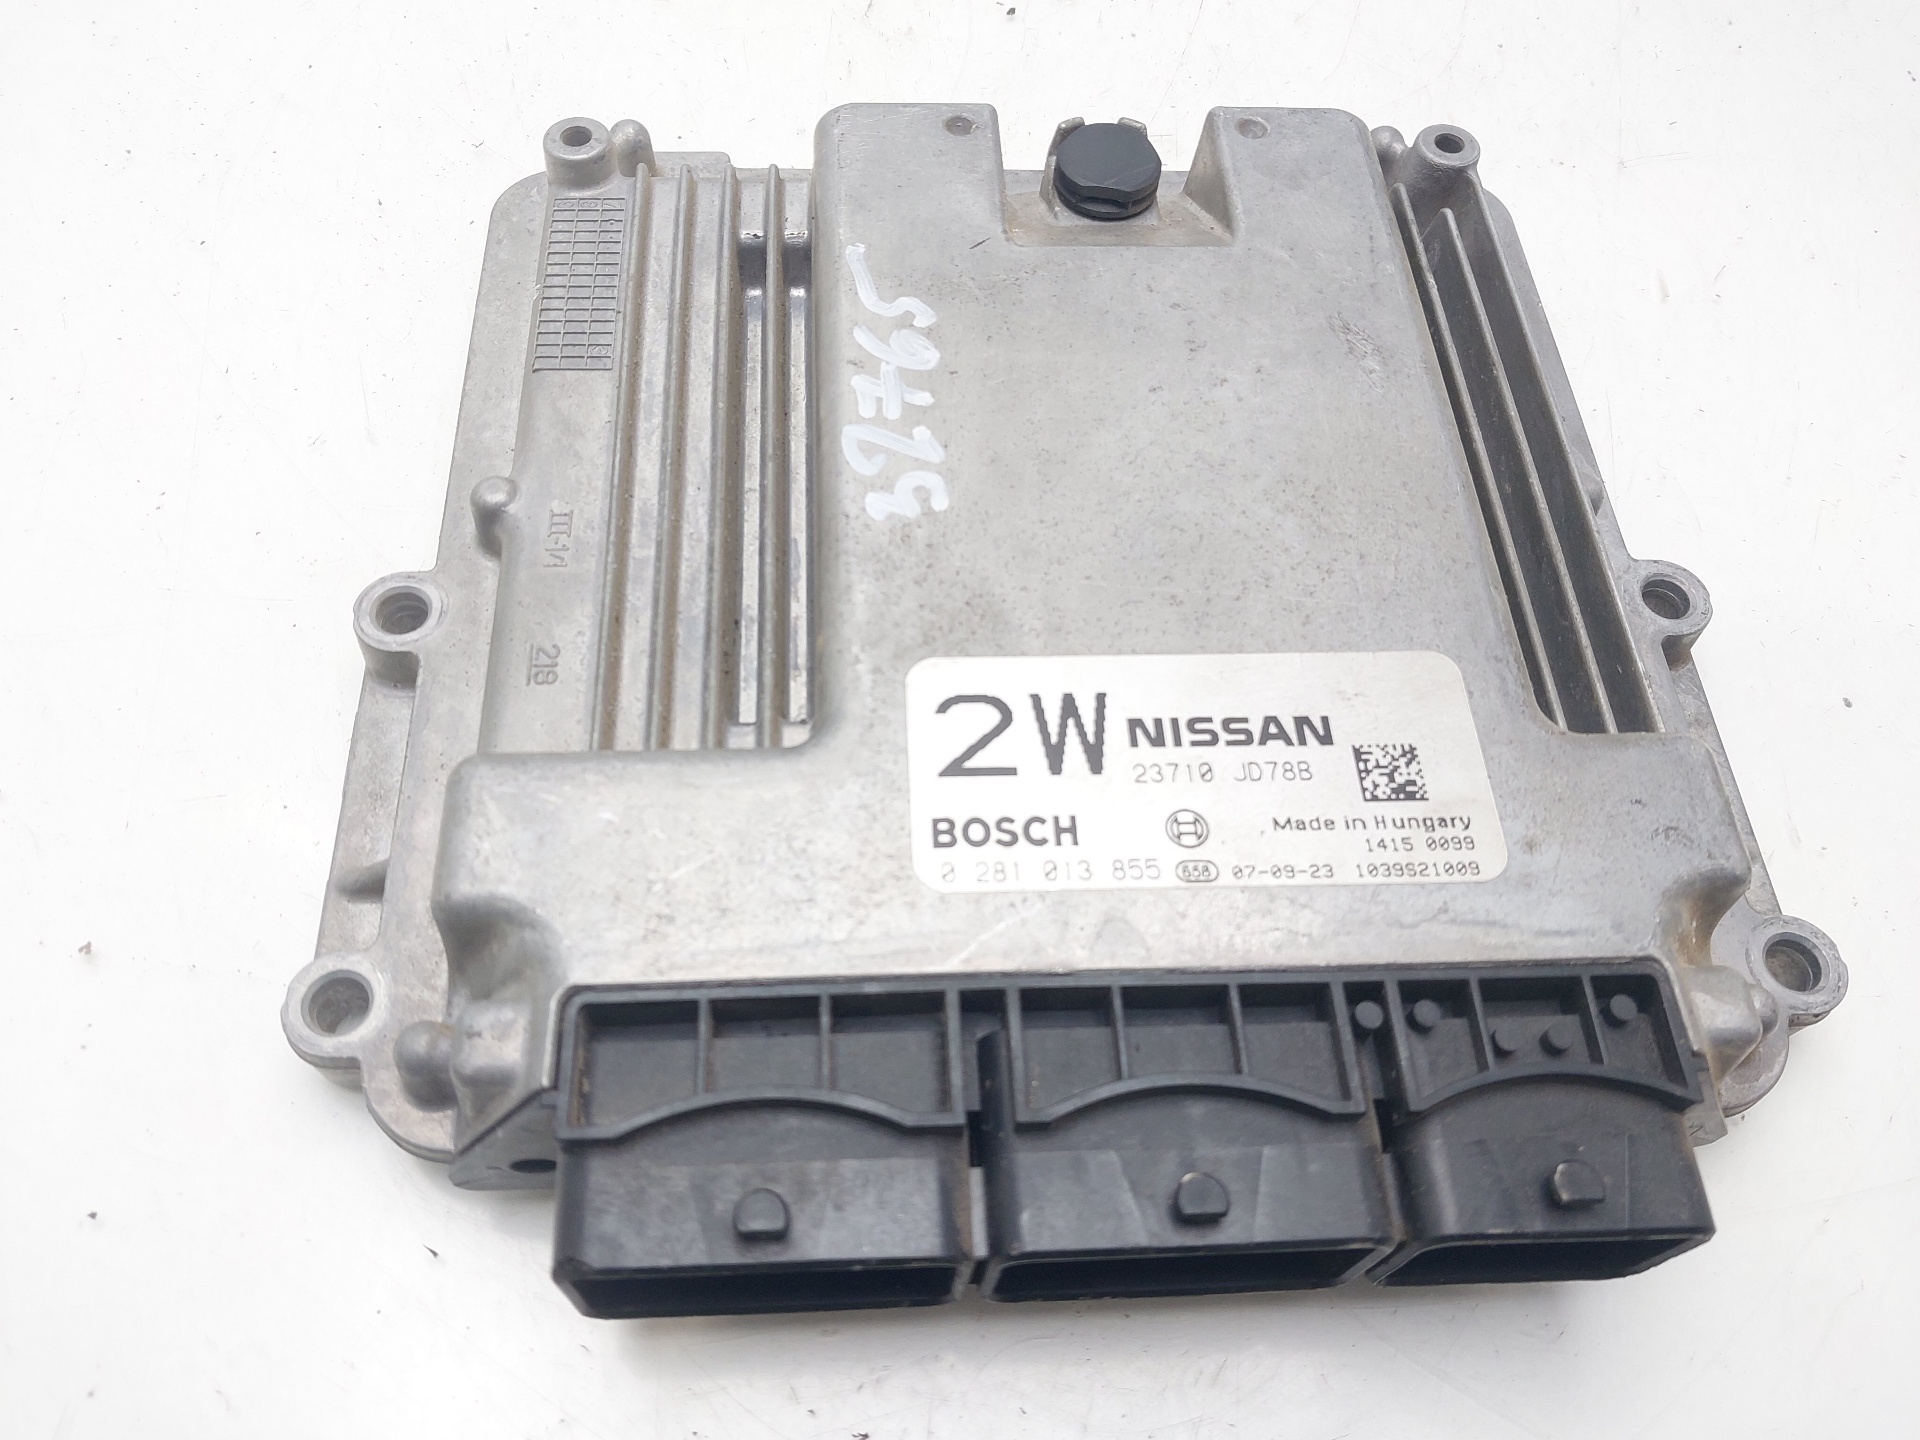 NISSAN Qashqai 1 generation (2007-2014) Engine Control Unit ECU 23710JD78B 23032477